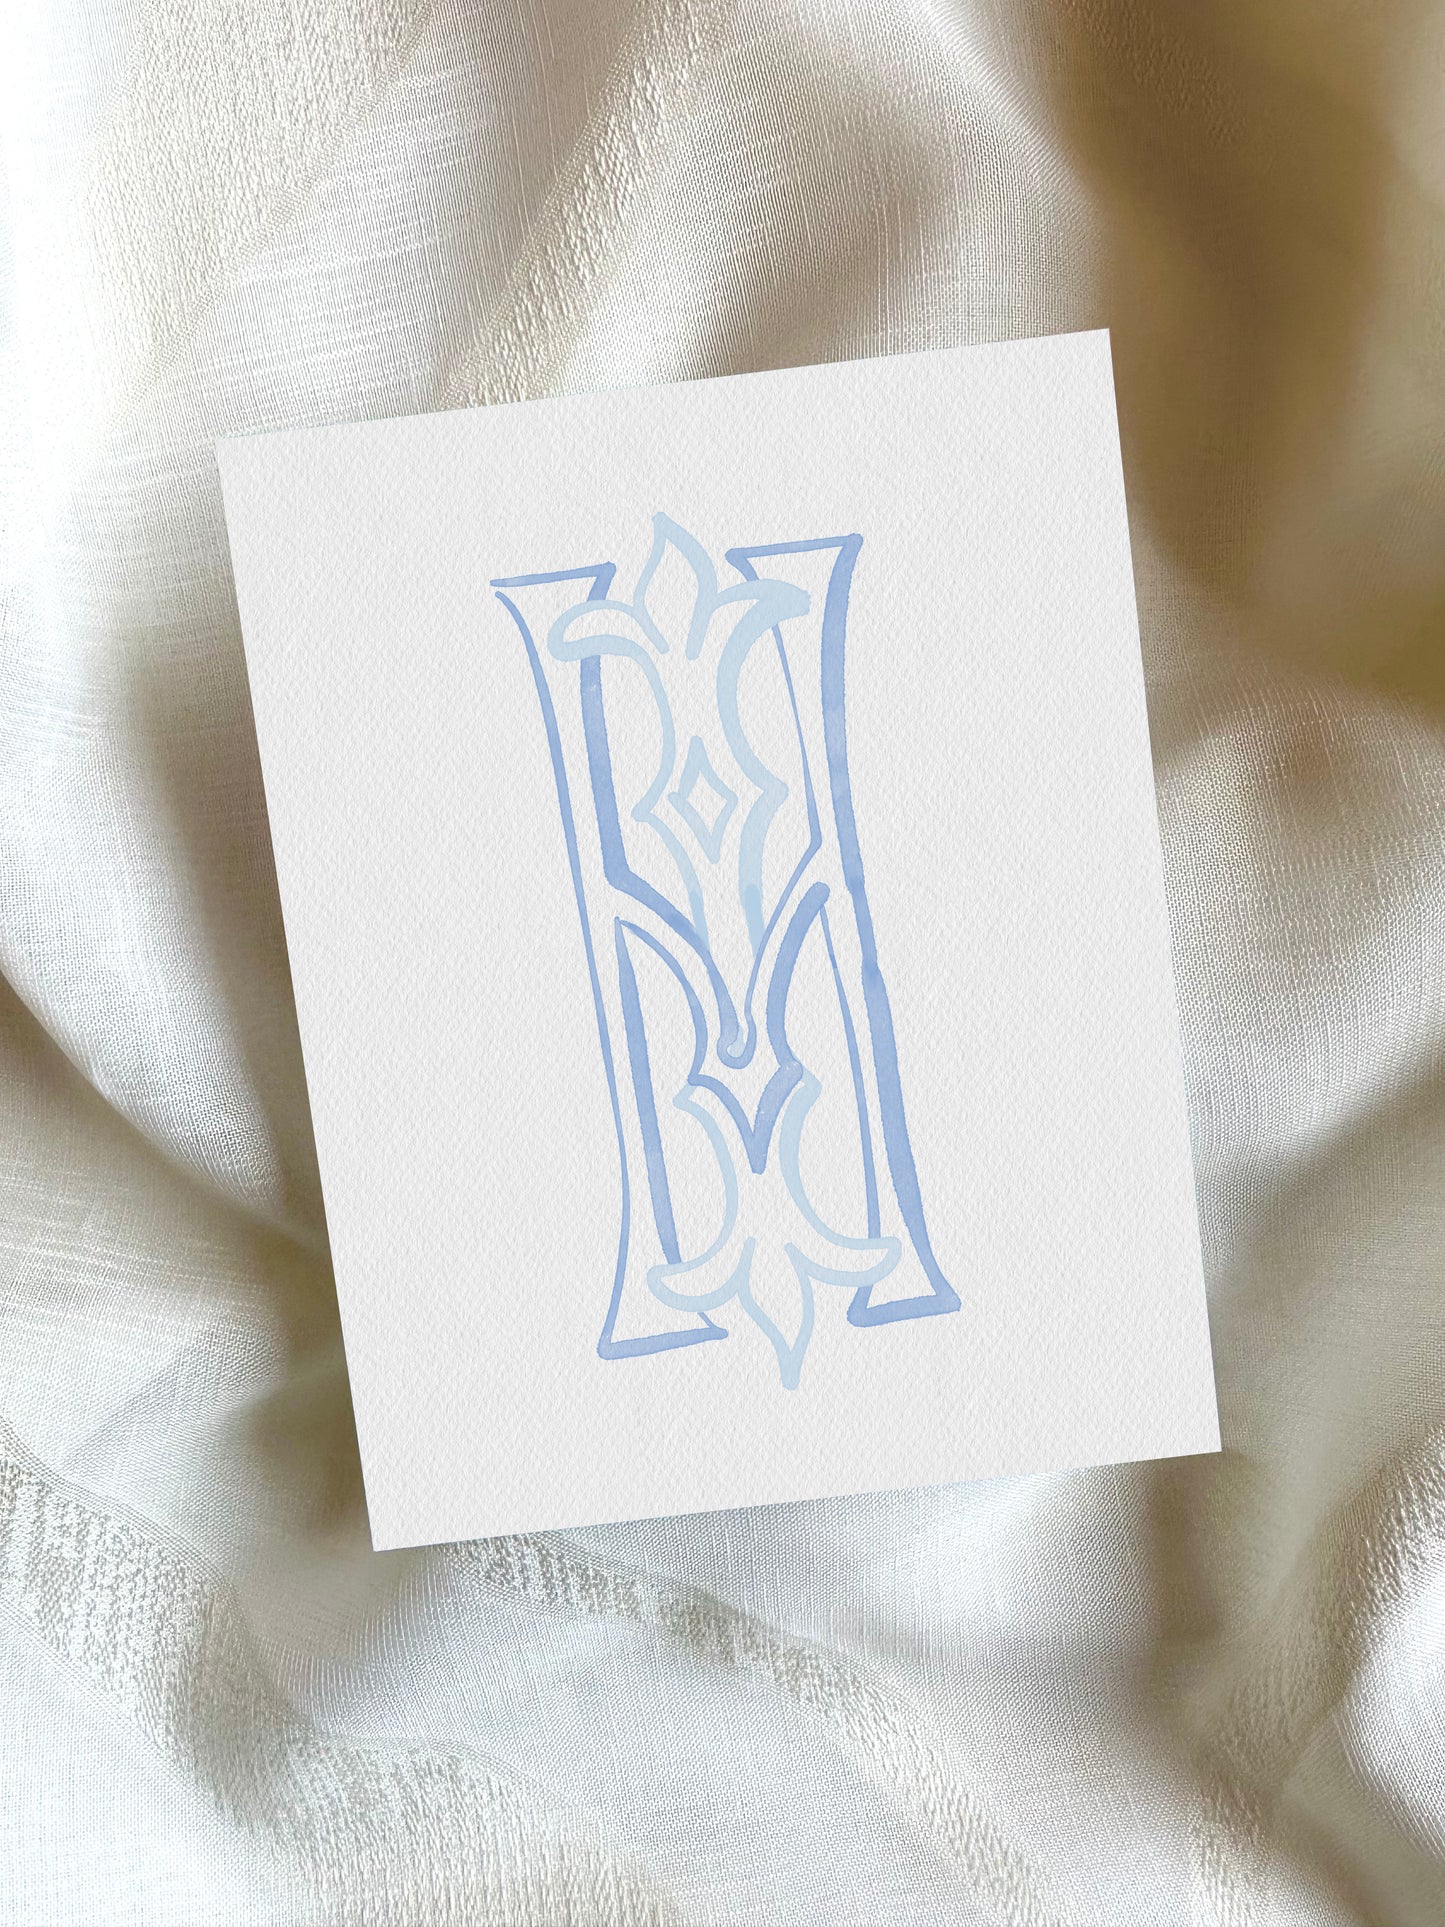 2 Letter Monogram with Letters HI IH | Digital Download - Wedding Monogram SVG, Personal Logo, Wedding Logo for Wedding Invitations The Wedding Crest Lab